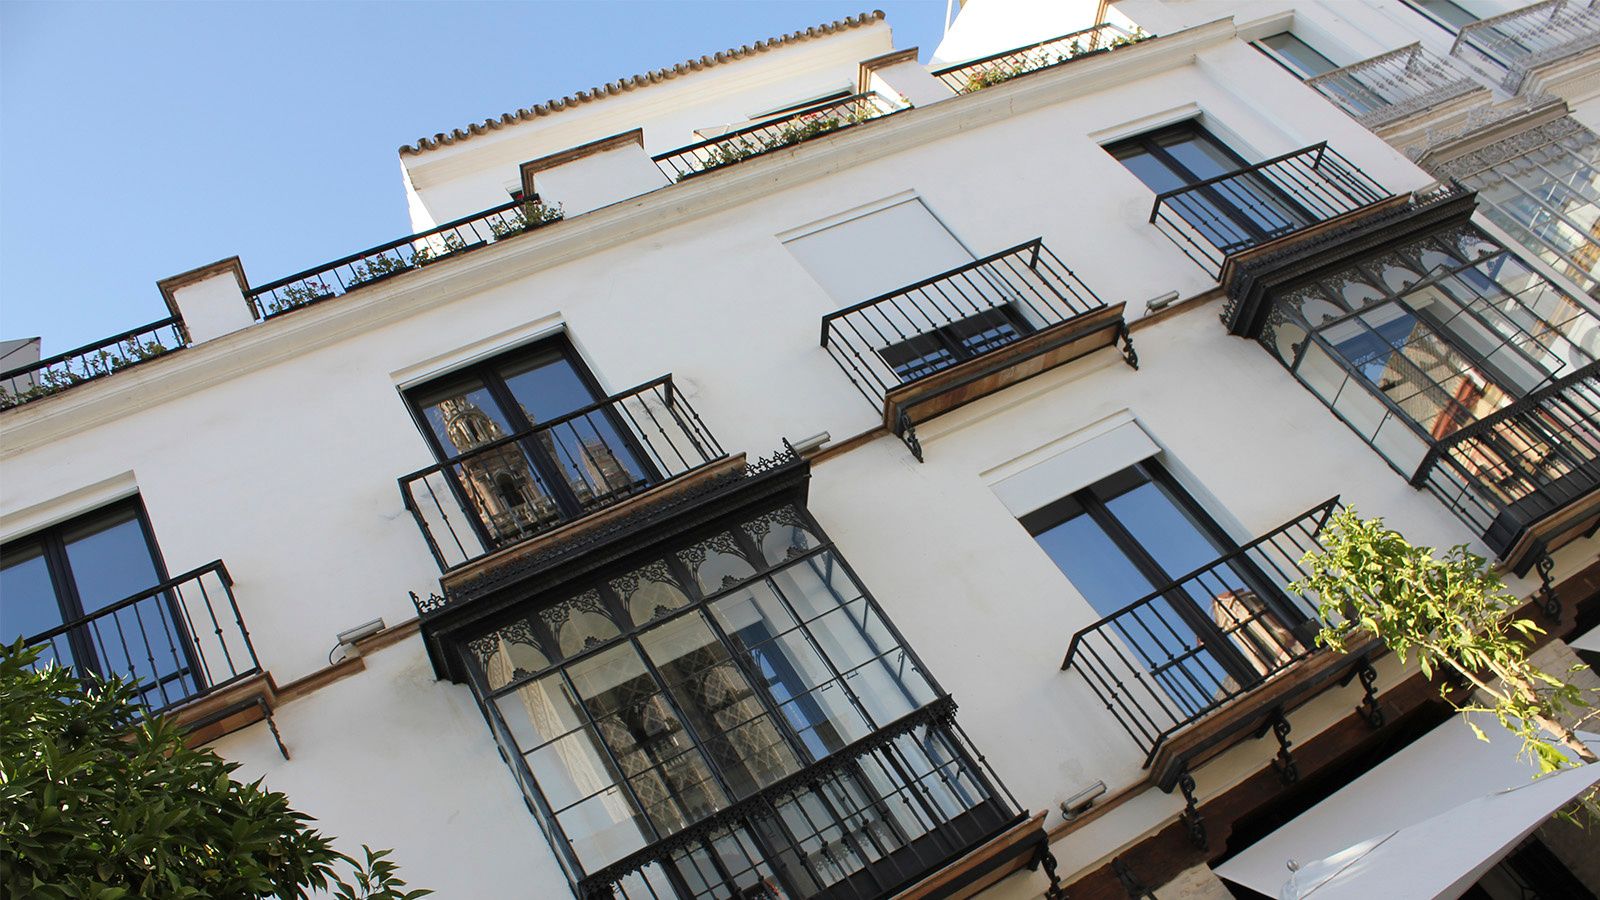  exterior facade EME Catedral Mercer hotel building in Seville